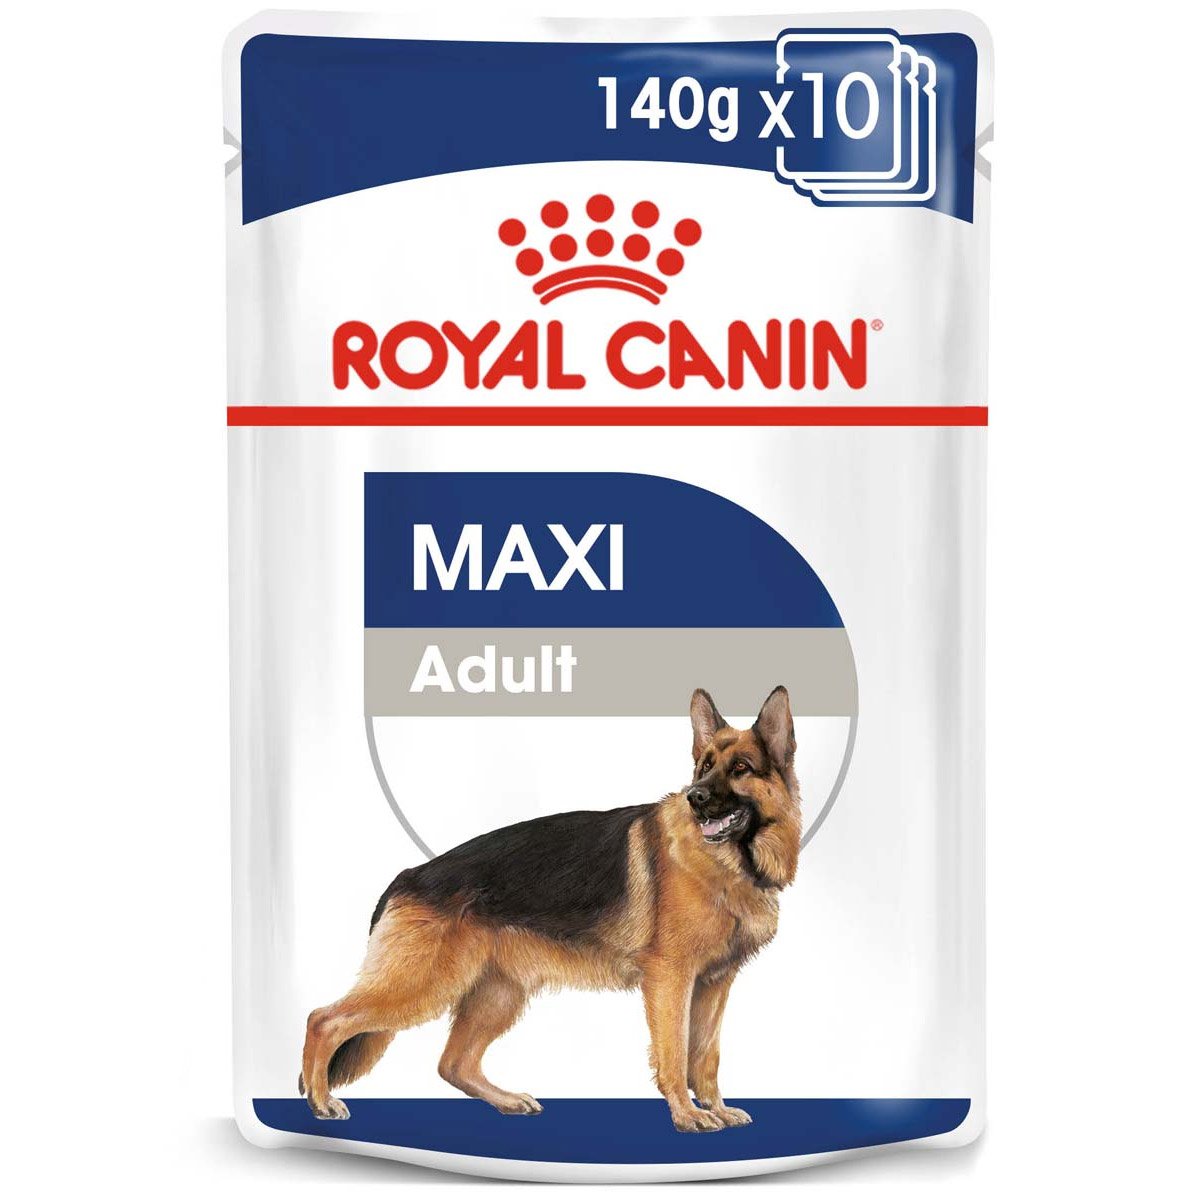 ROYAL CANIN MAXI ADULT Nassfutter für große Hunde 10x140g von Royal Canin